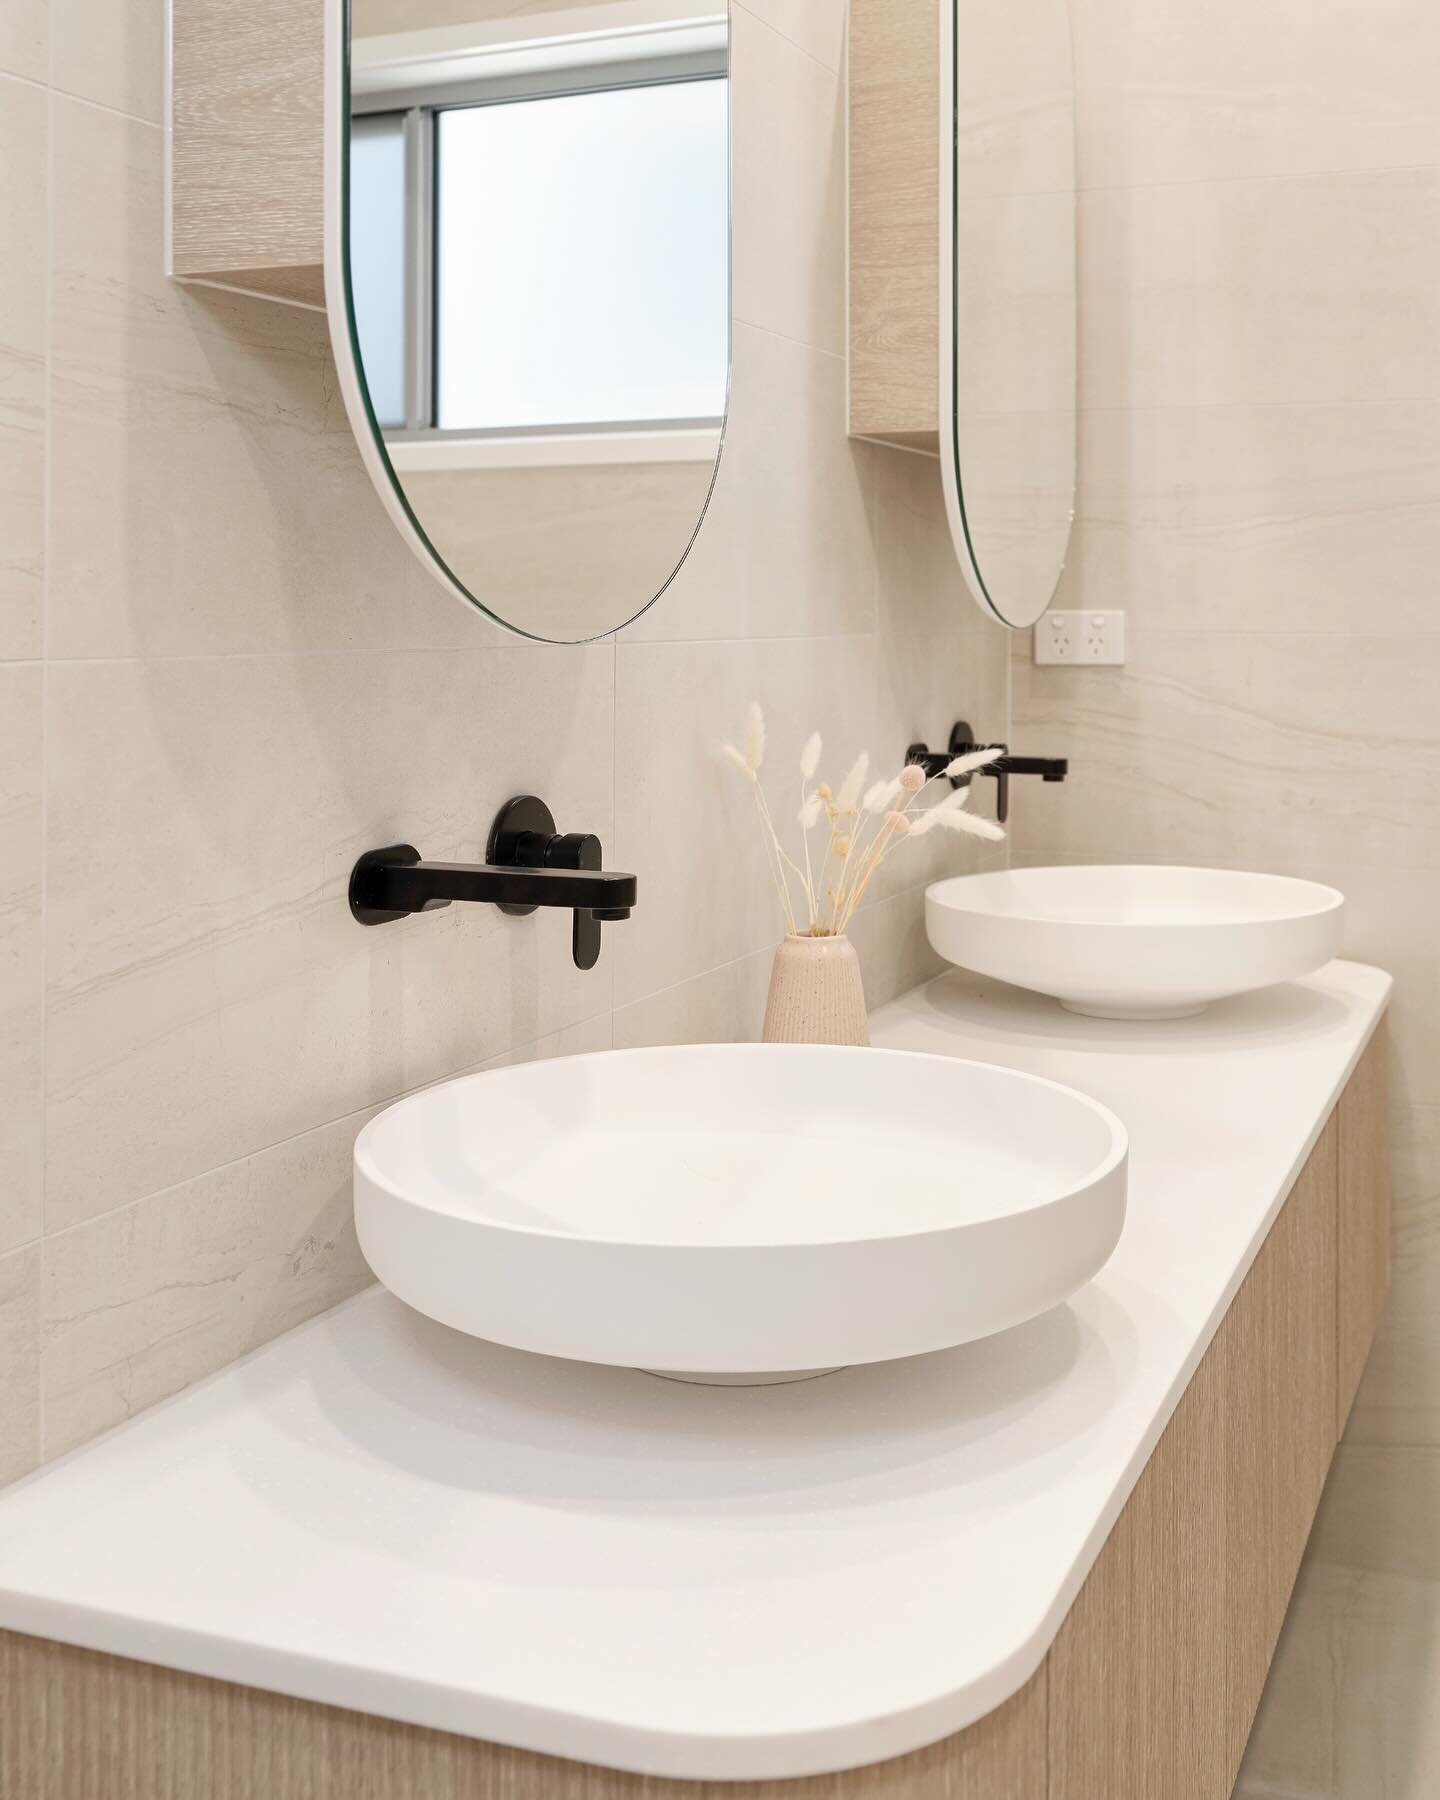 Sealing beautiful bathroom renos for @homesbyholmes1 🙌🏼